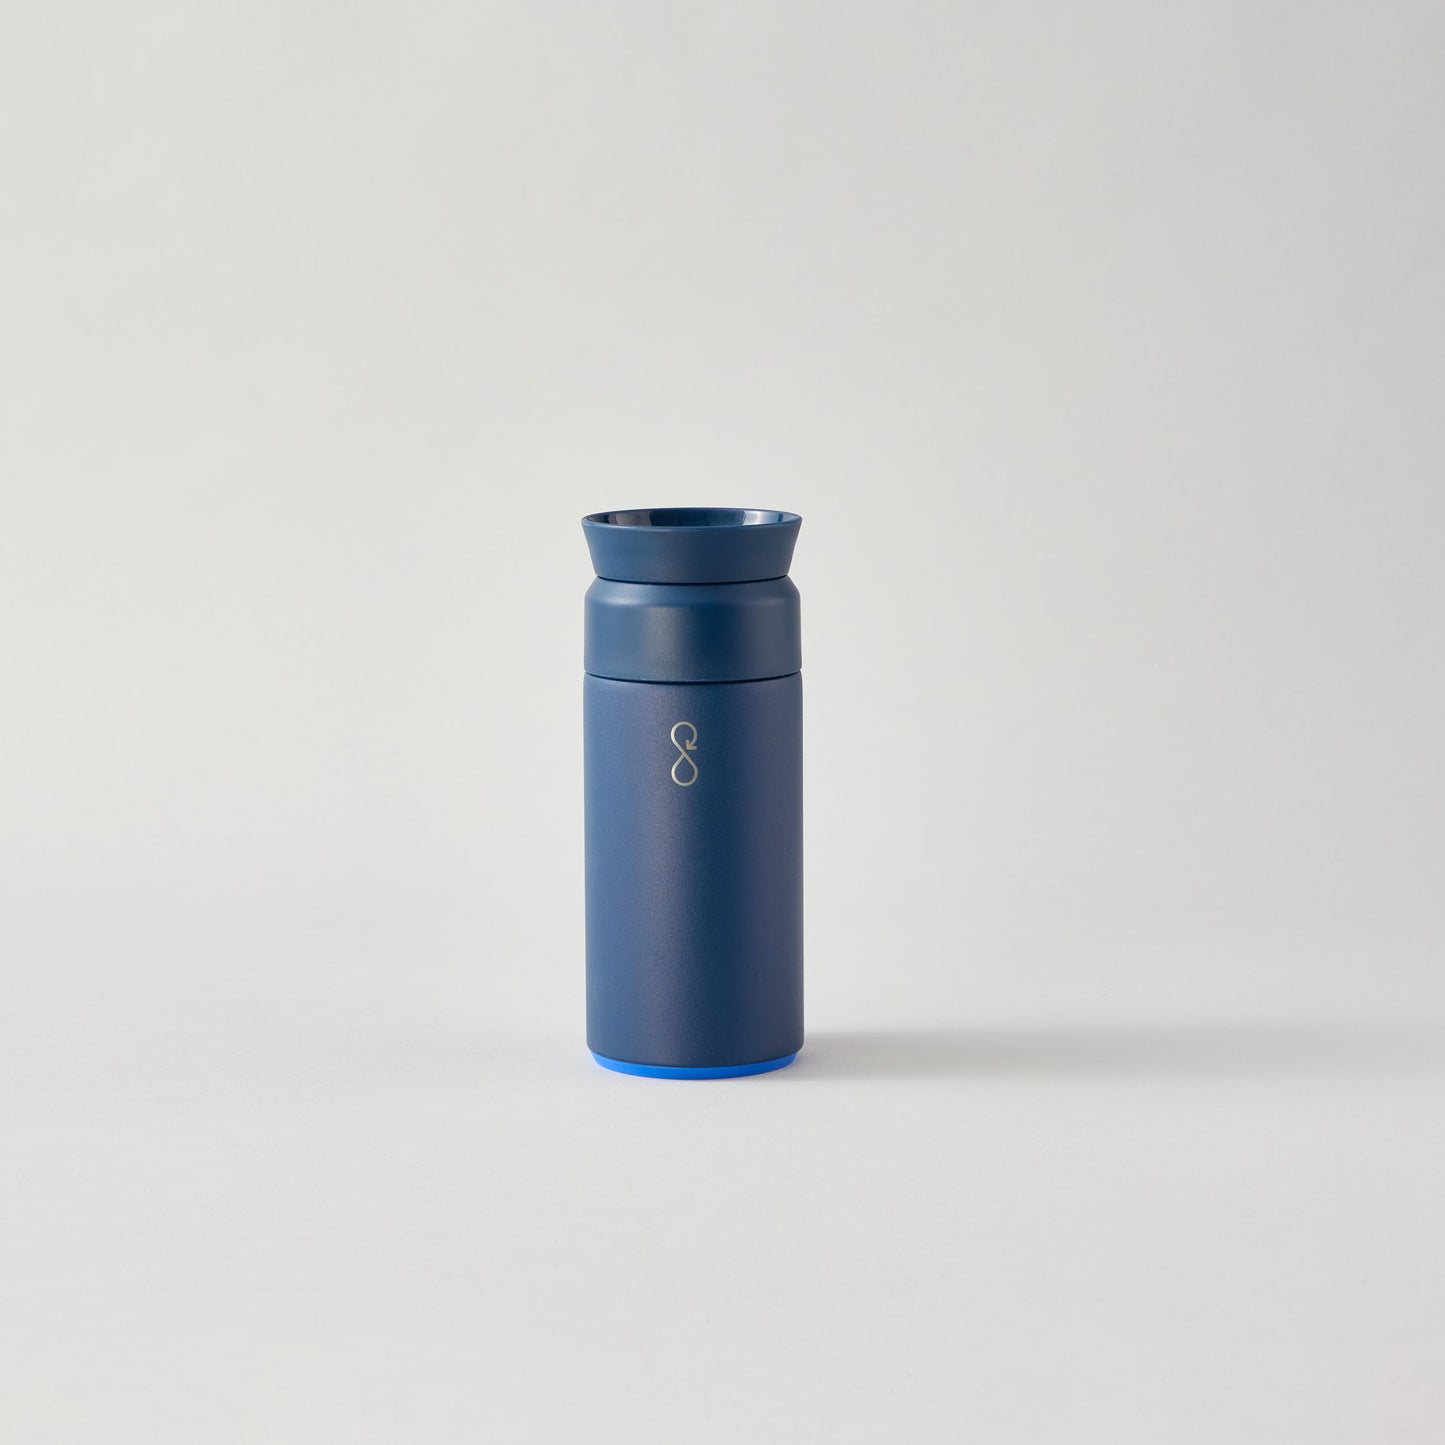 Brew Flask - Ocean Blue (12oz)